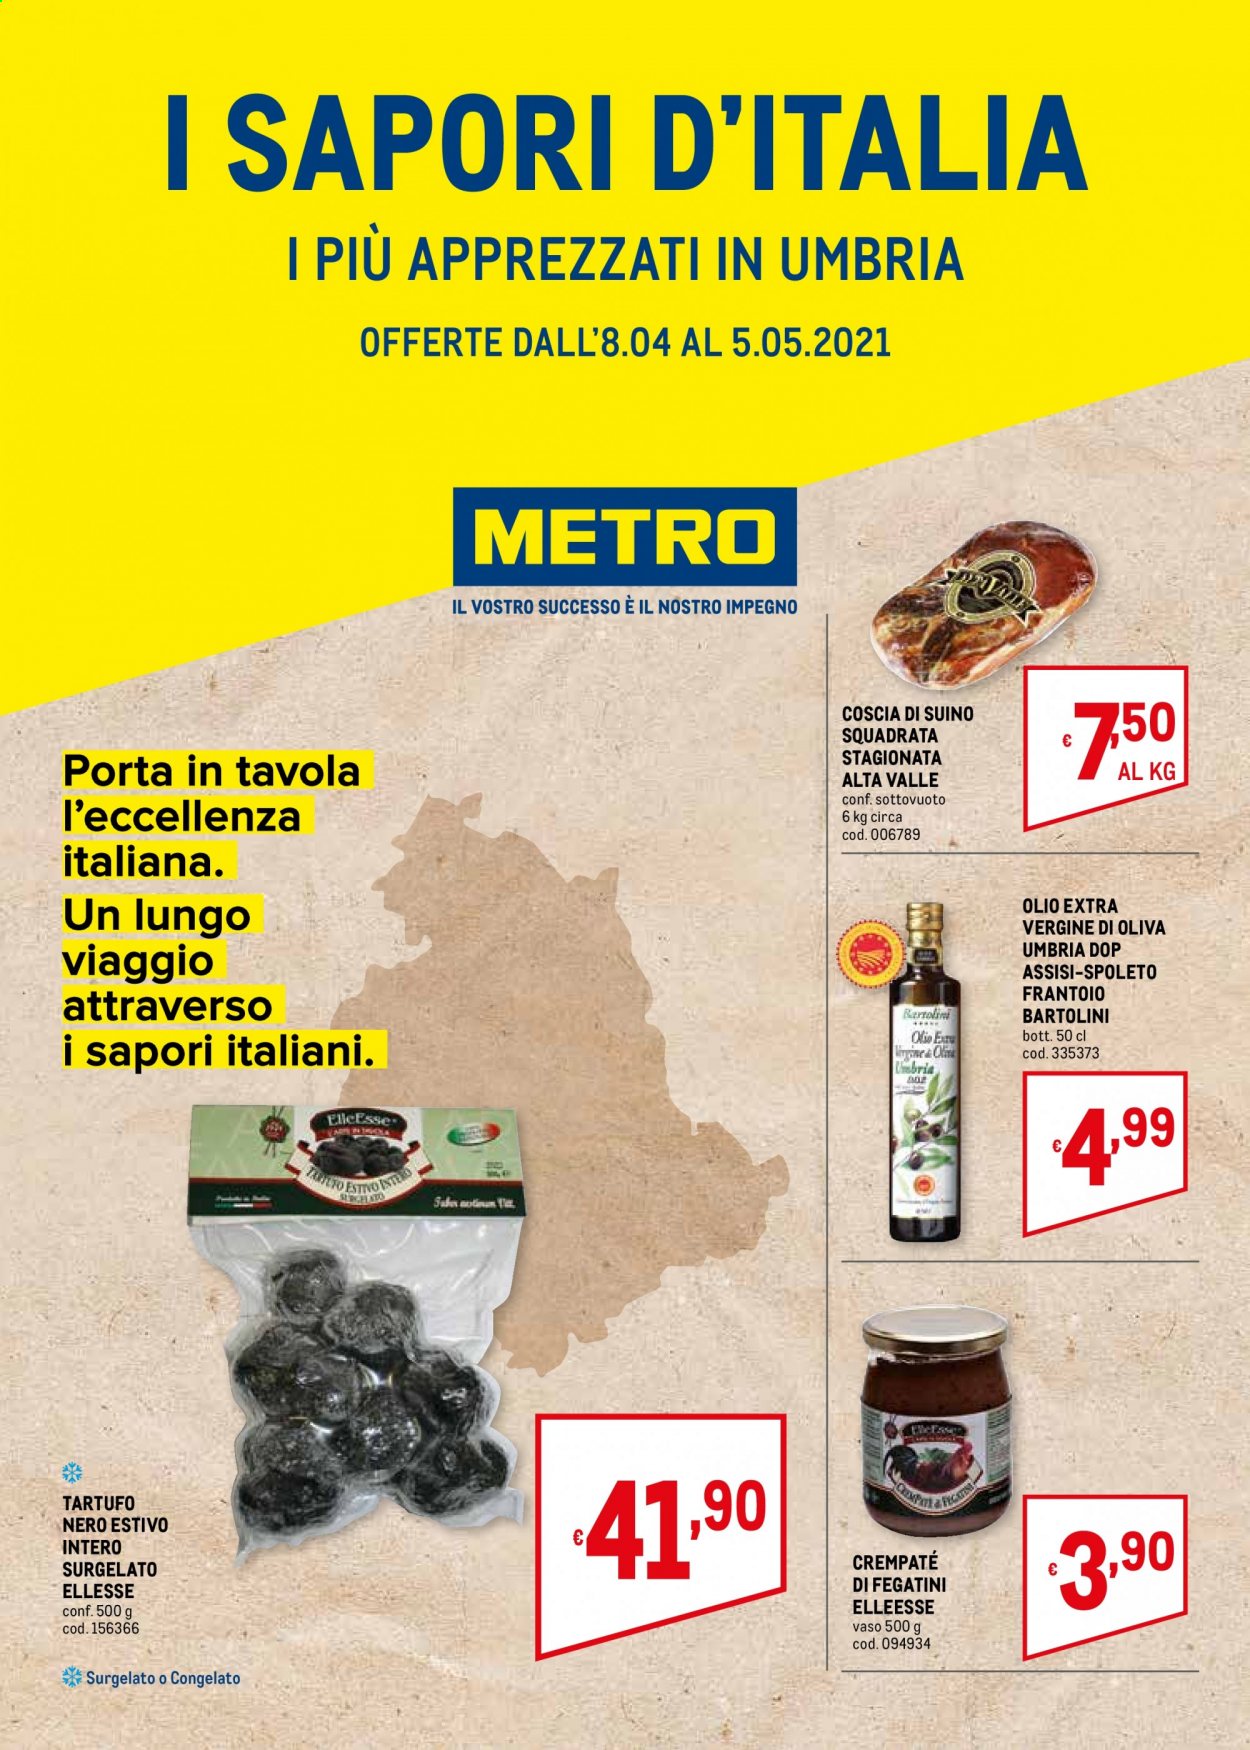 Volantino Metro - 8.4.2021 - 5.5.2021.